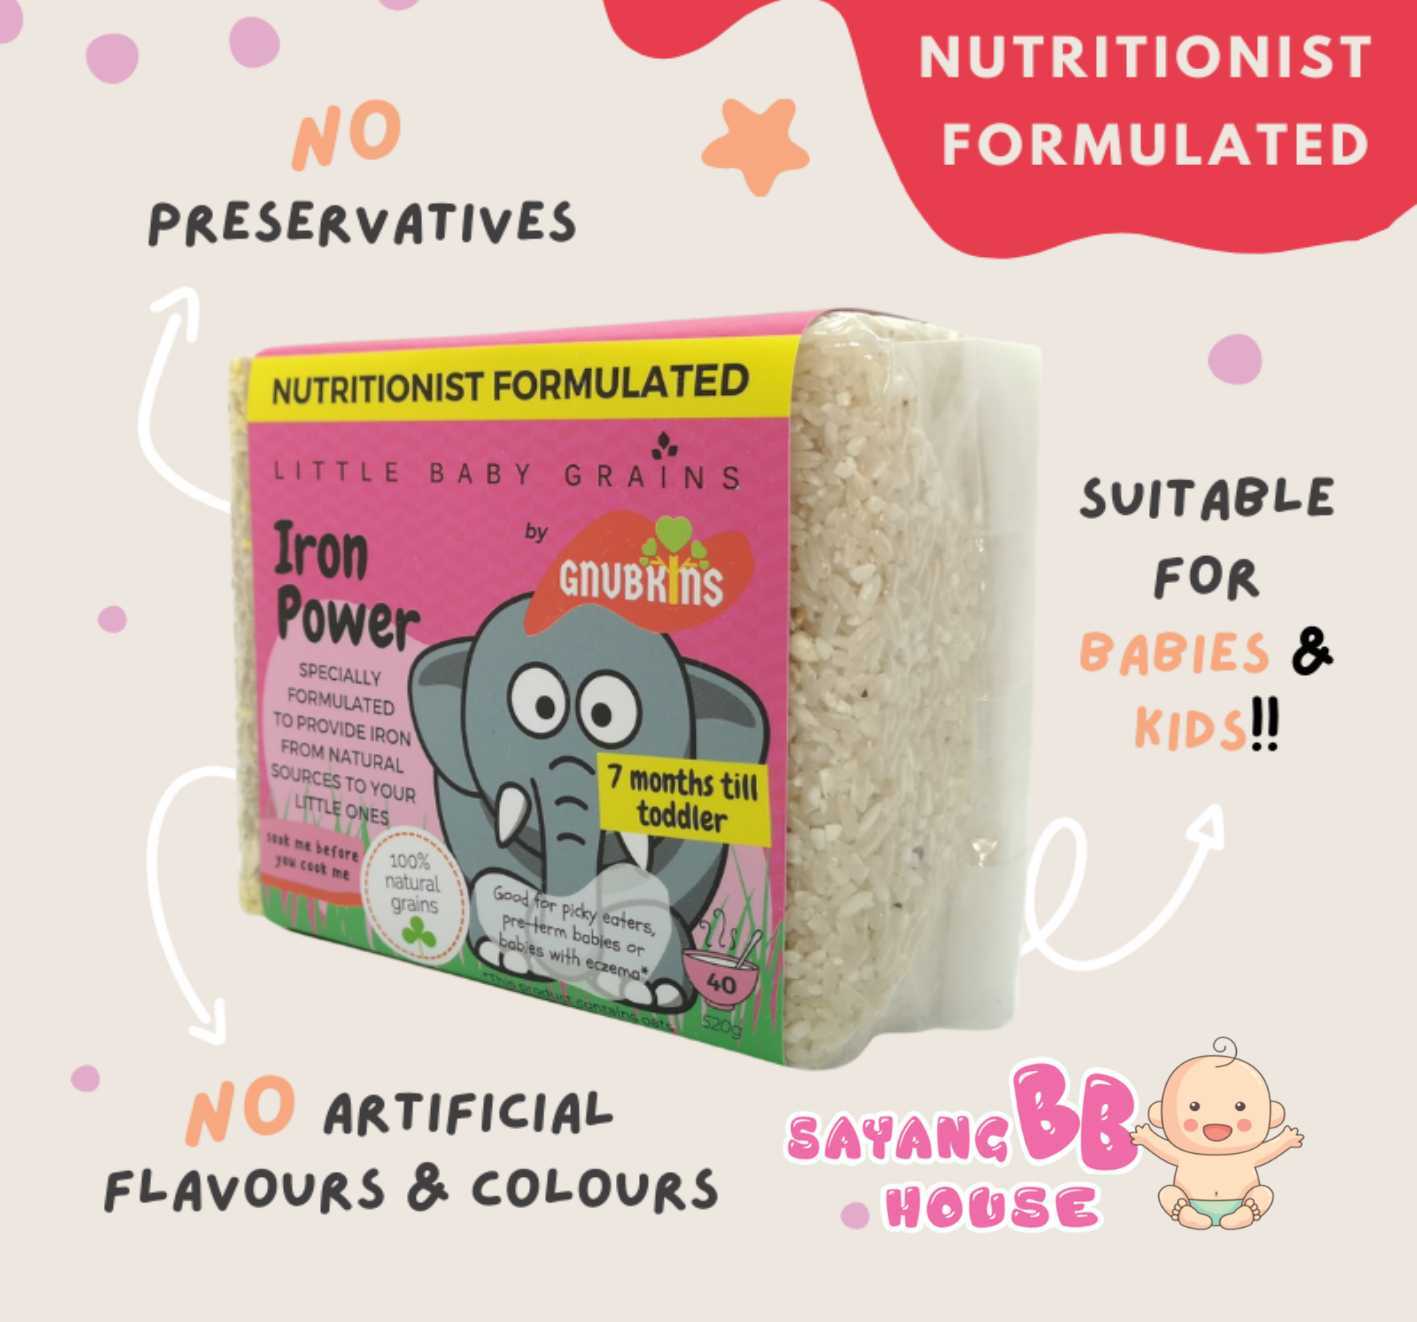 Gunbkins Iron Power from 7 months Baby Food 100% natural grains